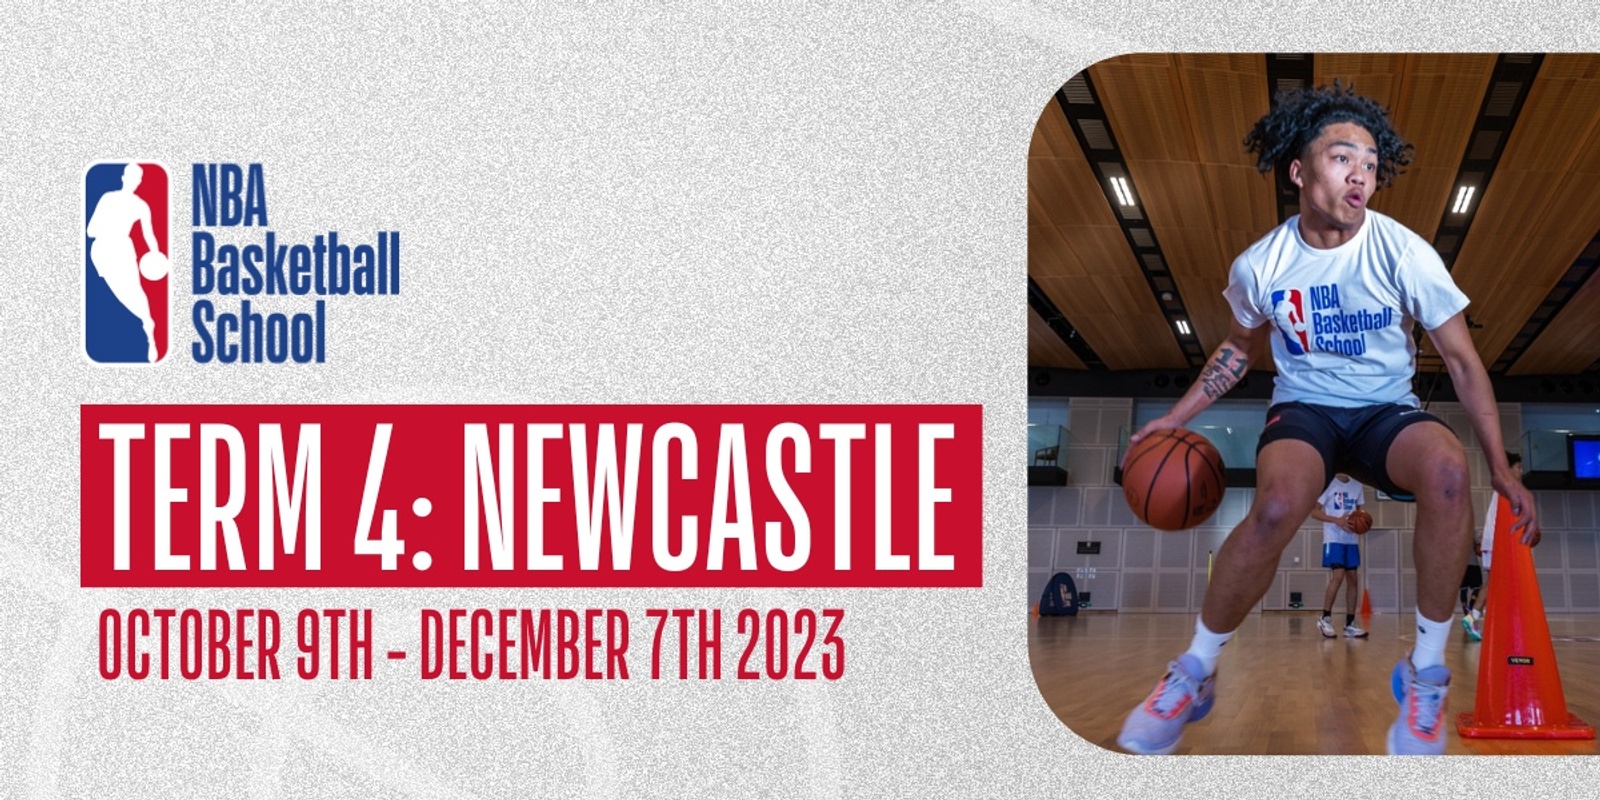 Banner image for Term 4 2023 Newcastle at NBA Basketball School Australia